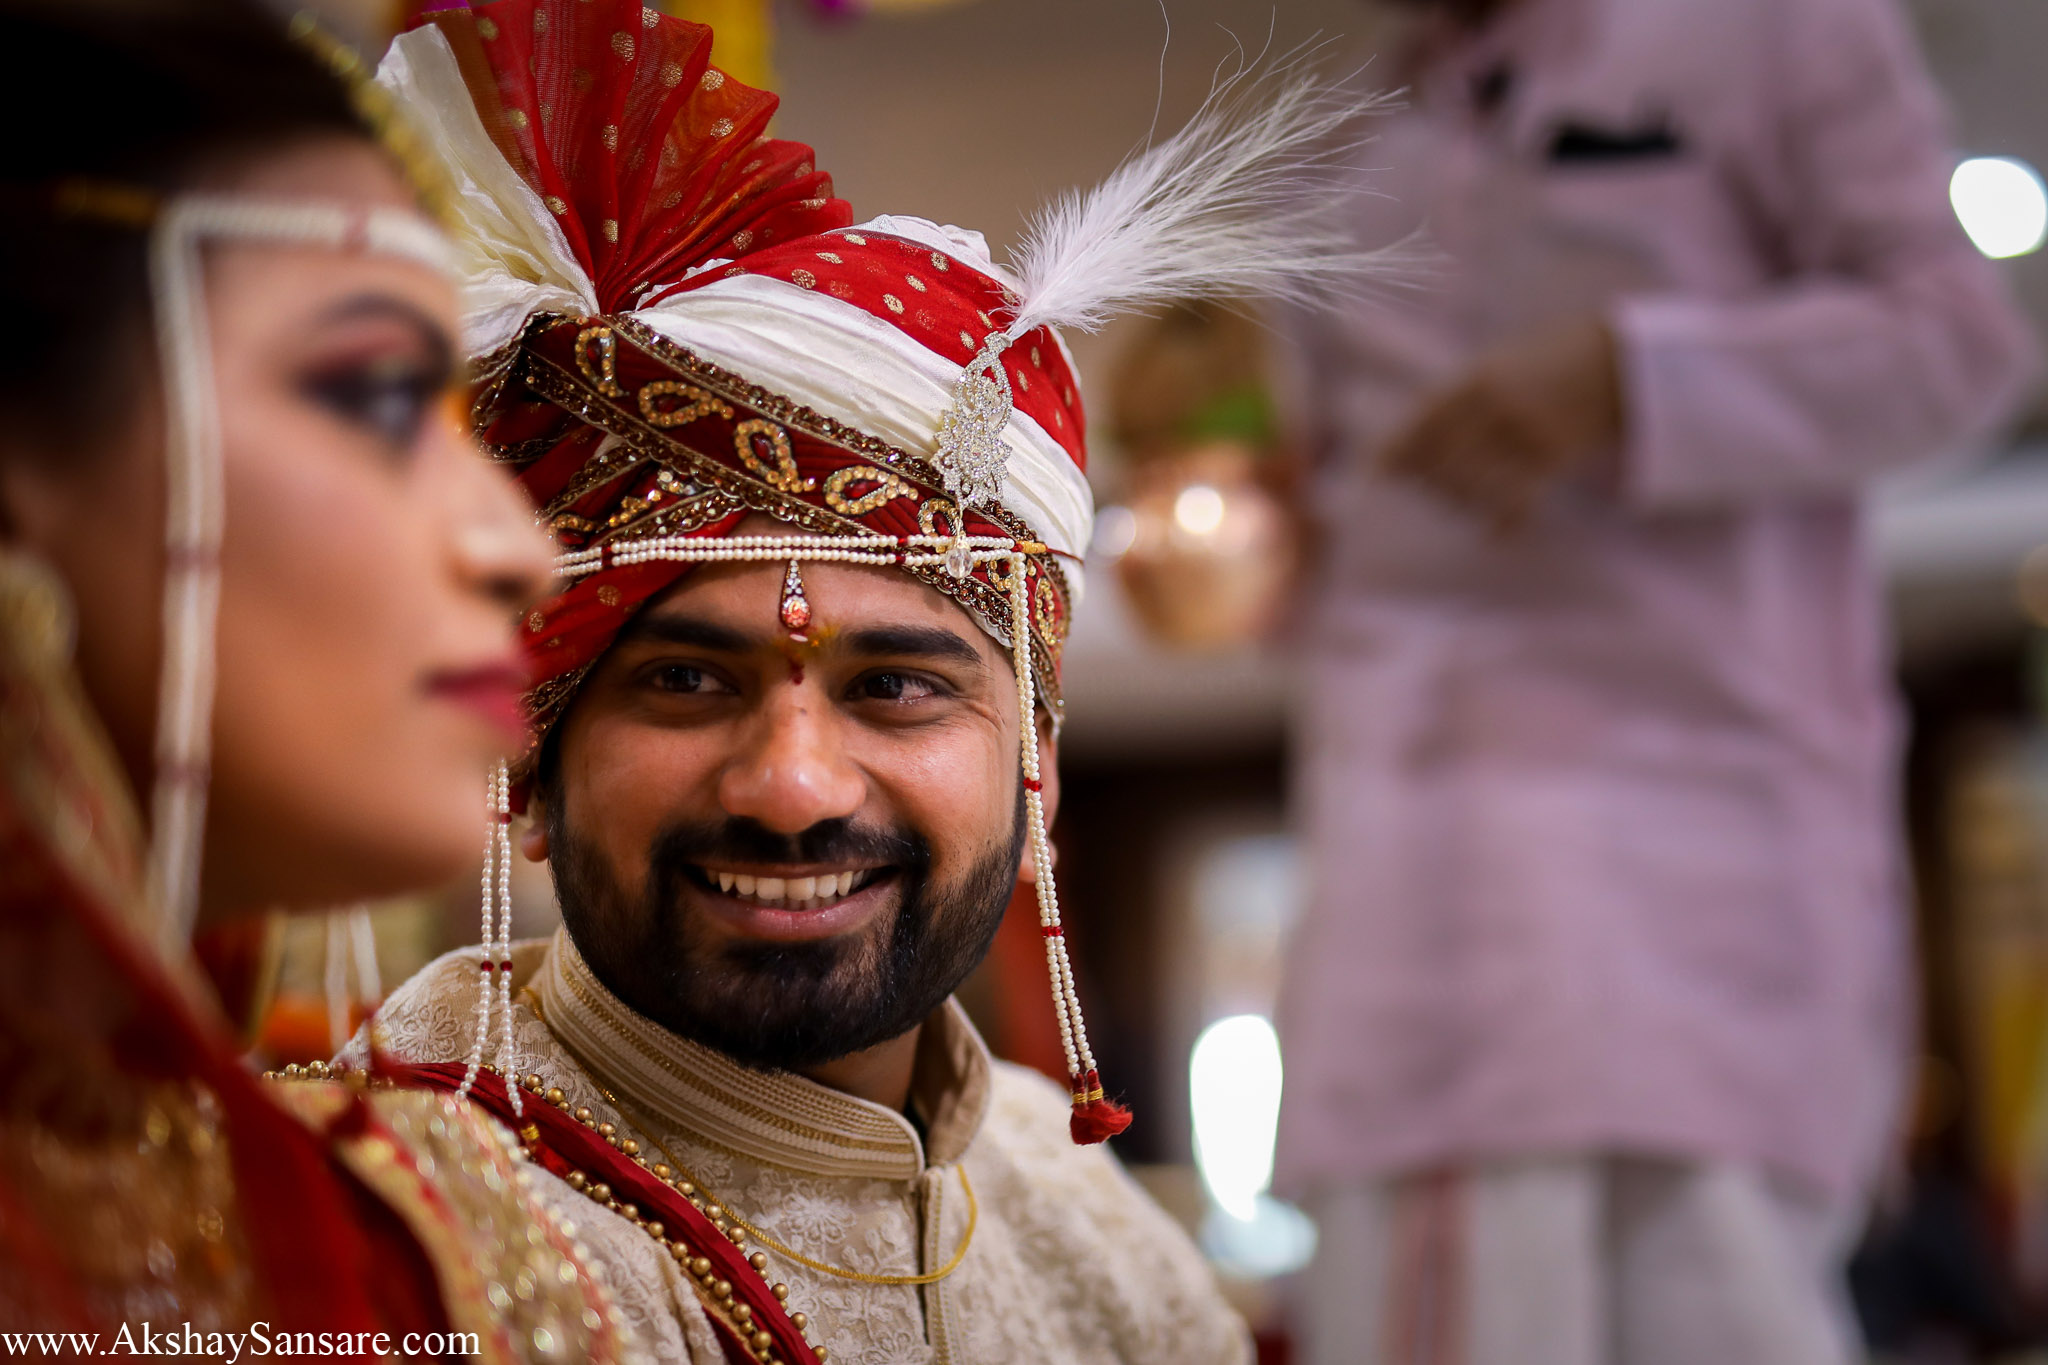 Ajay & Devika Akshay Sansare Photography Best Candid wedding photographer in mumbai india11.jpg